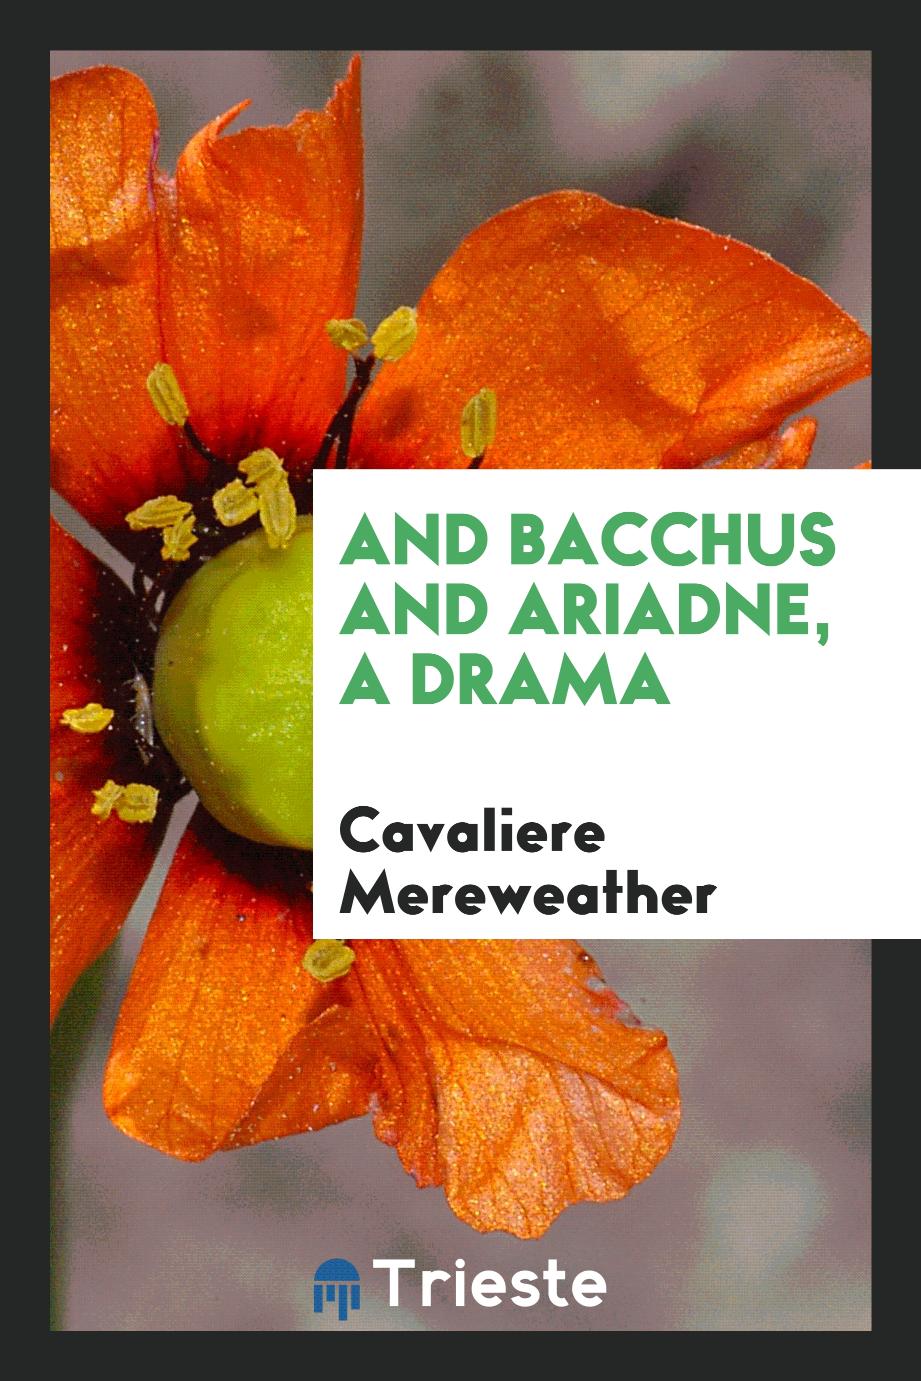 And Bacchus and Ariadne, a drama